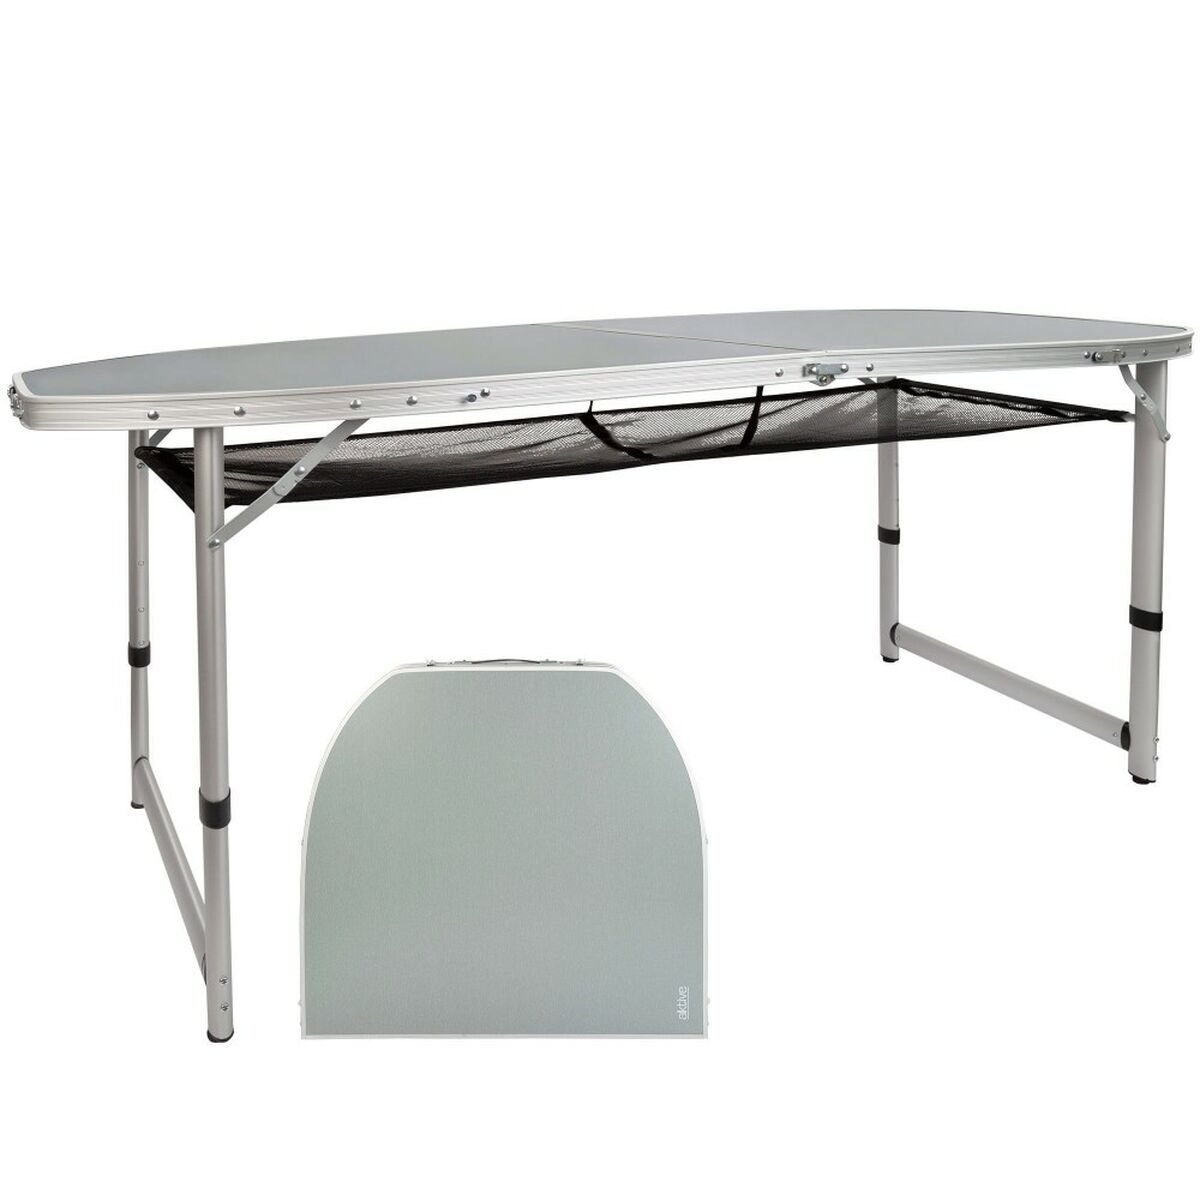 Table Aktive Pliable De Camping 149 x 71,5 x 80 cm